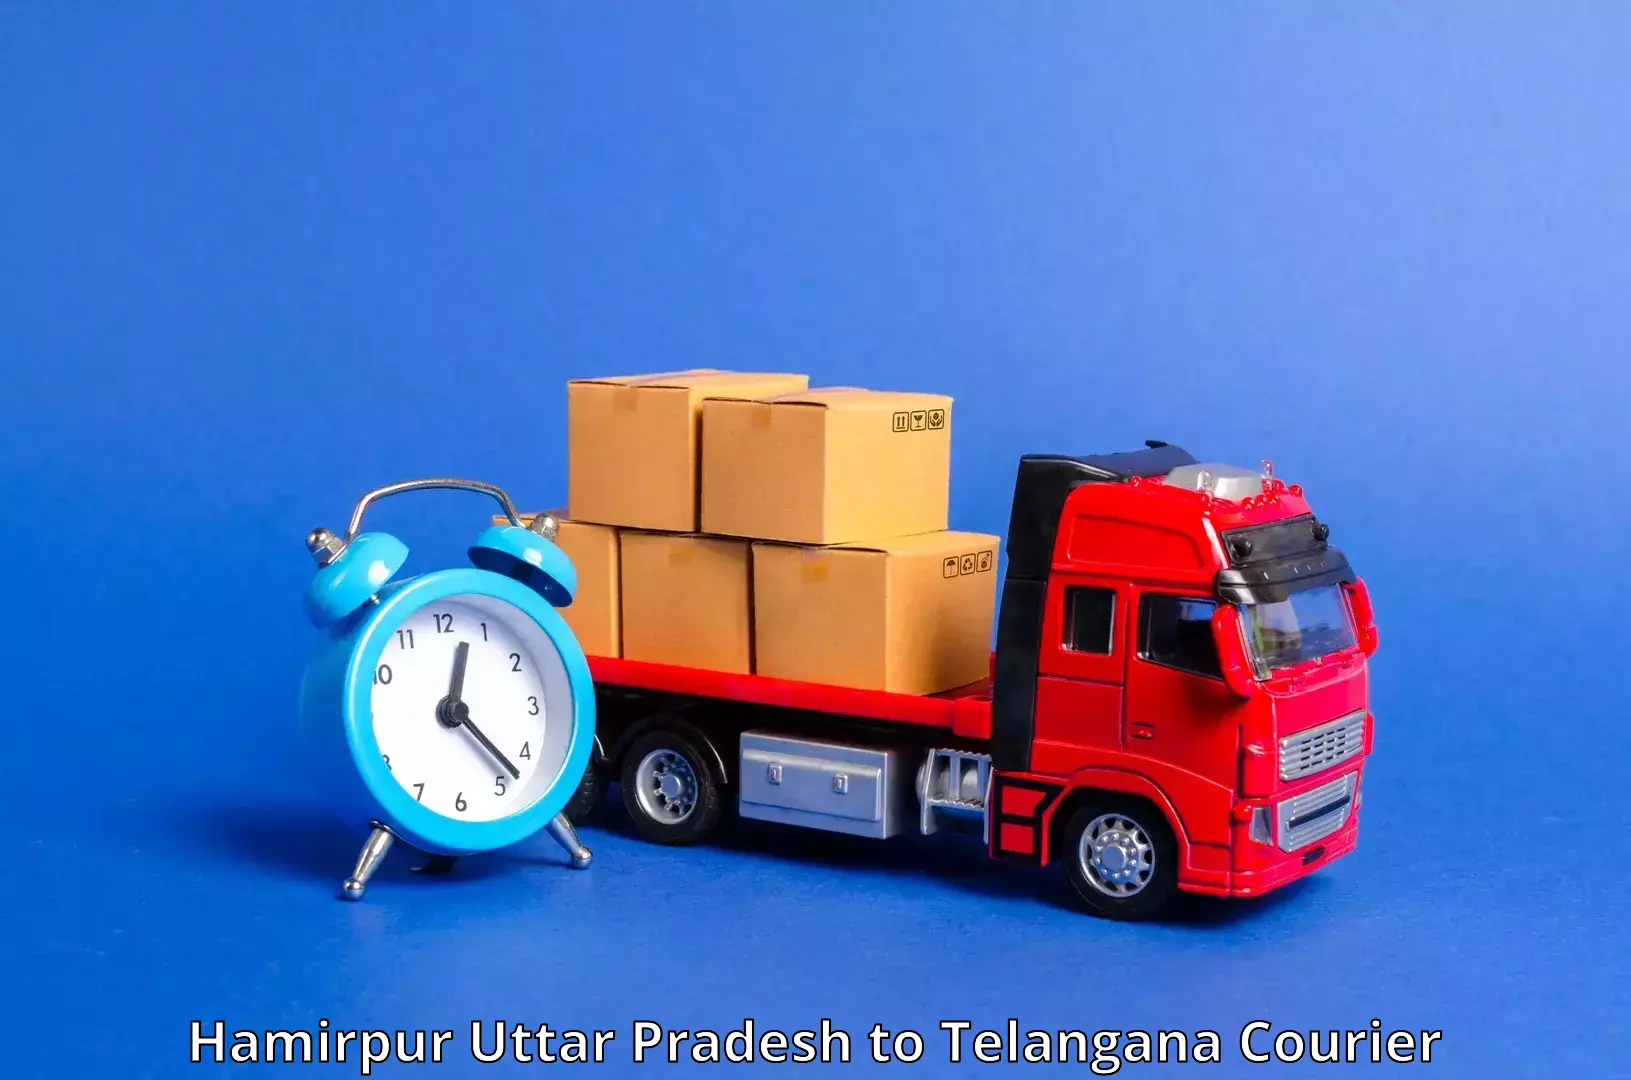 Round-the-clock parcel delivery Hamirpur Uttar Pradesh to Marikal